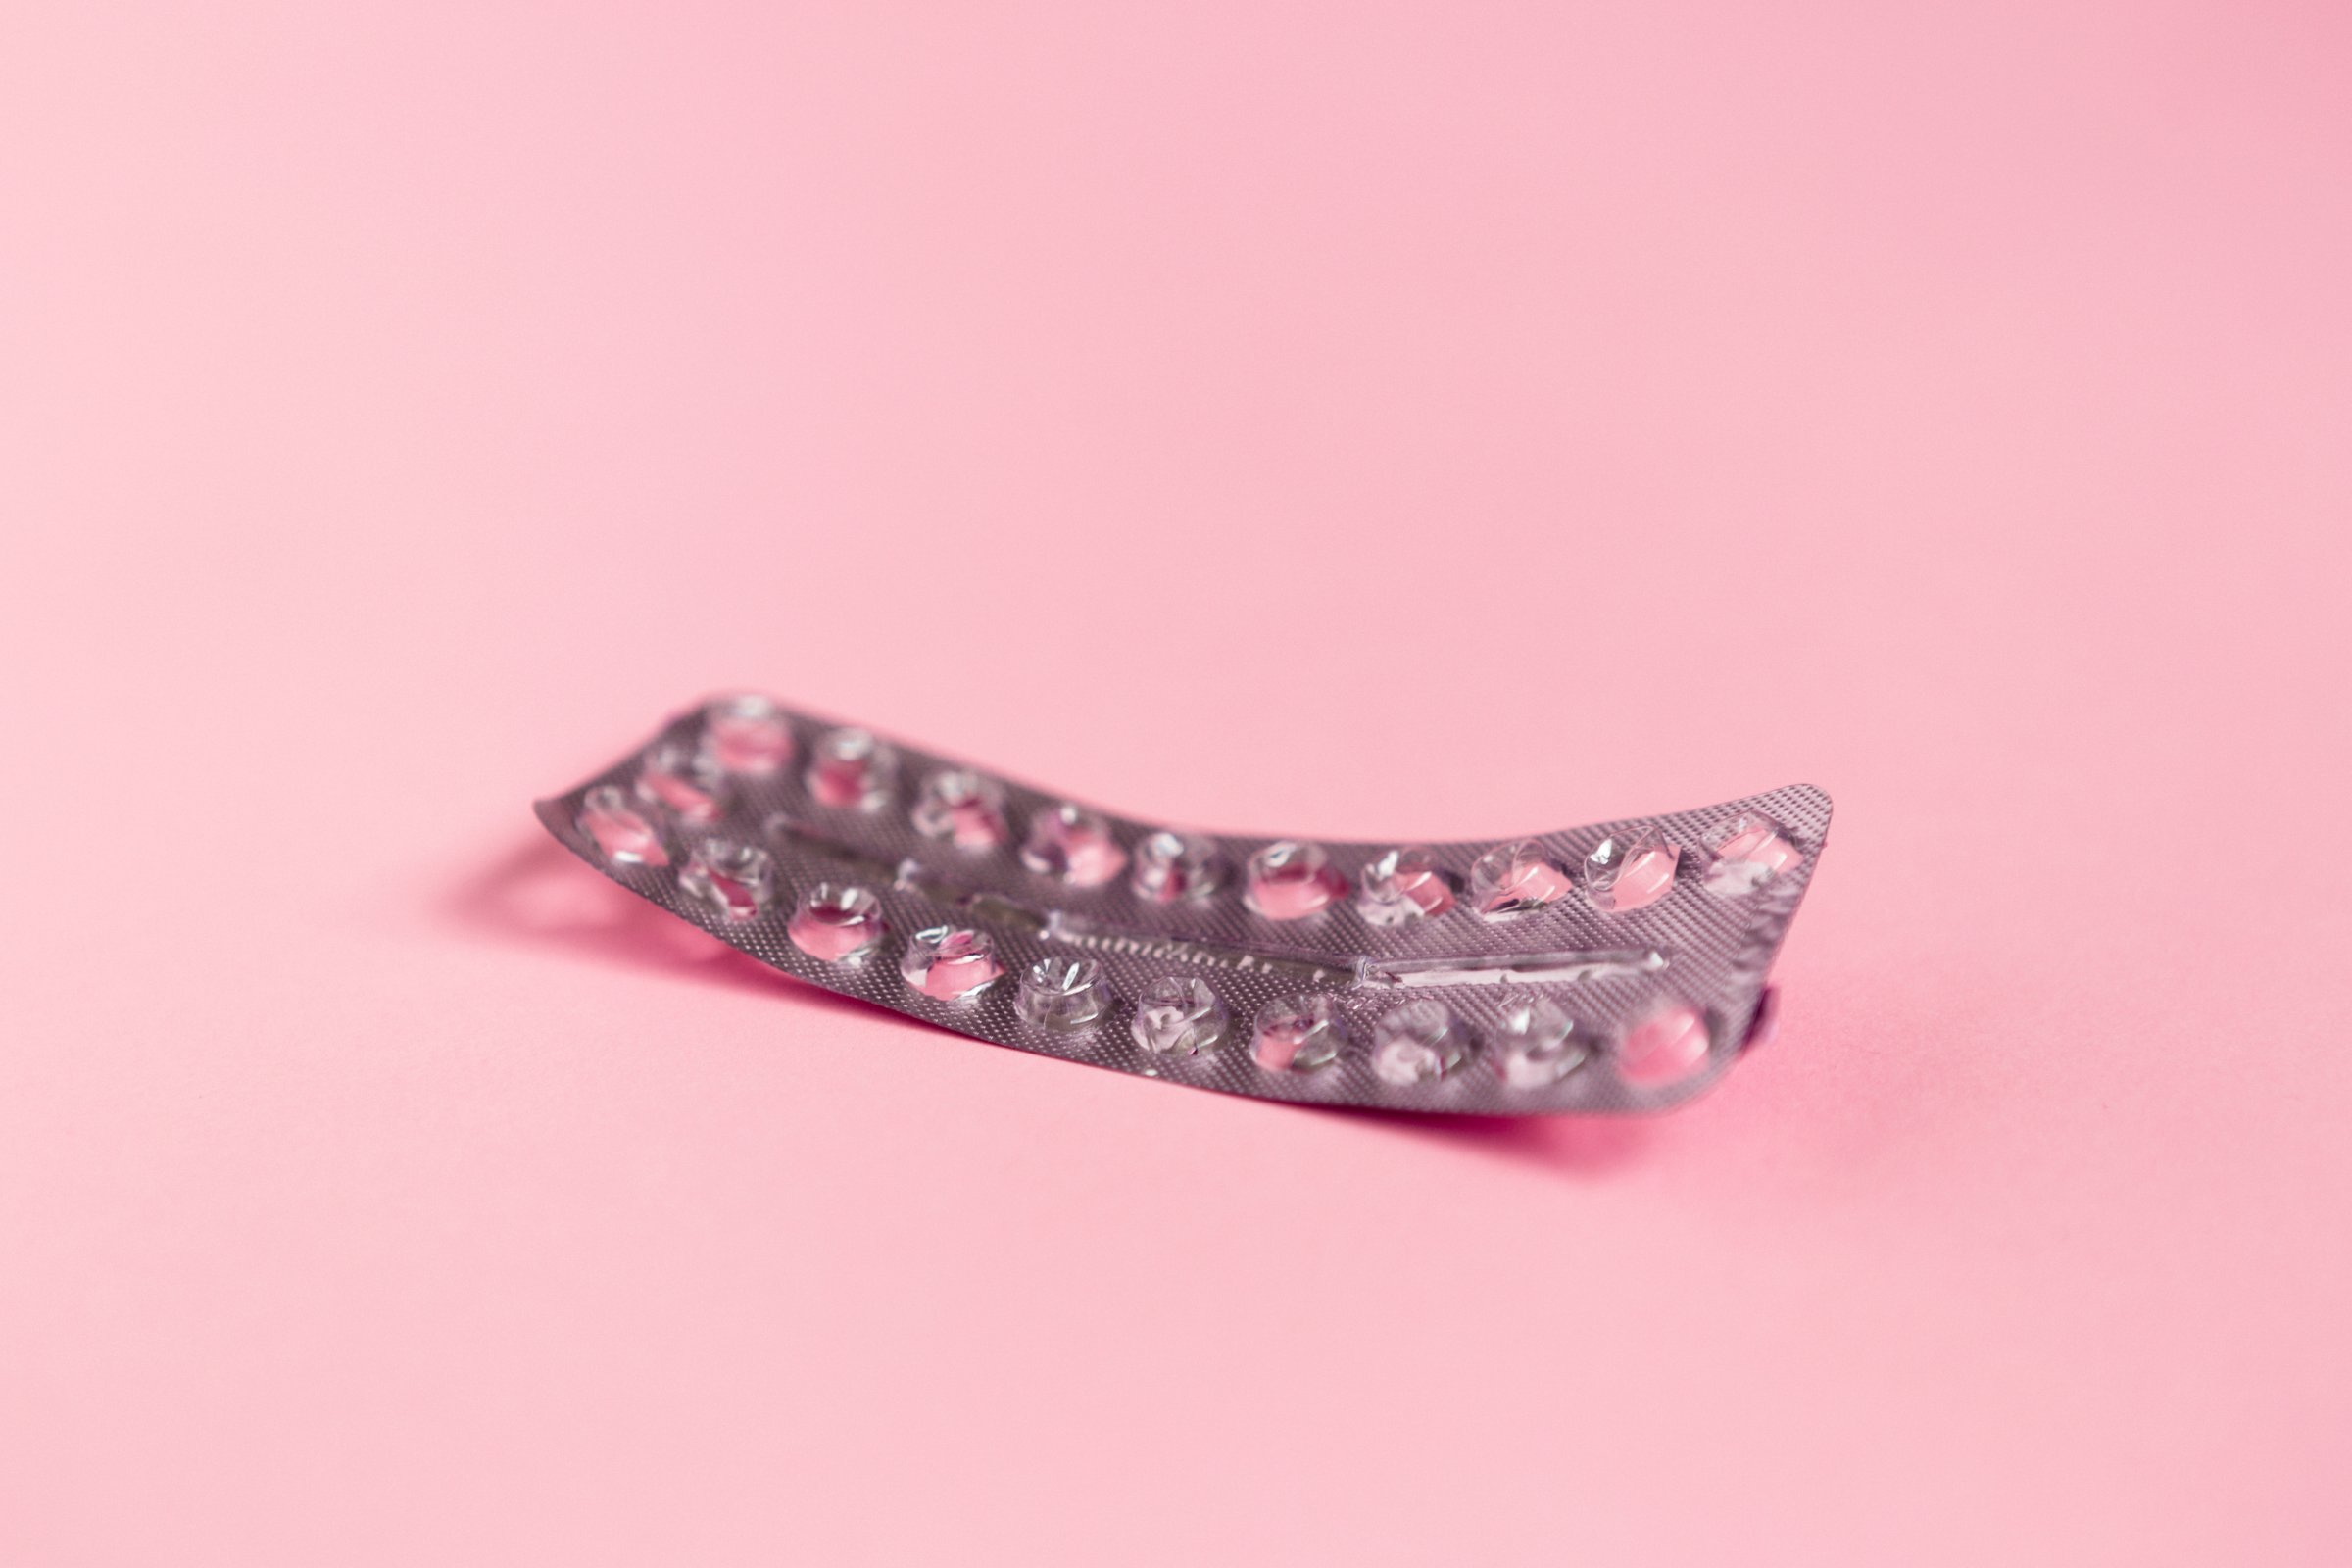 Empty strip of birth control pills on pink background.